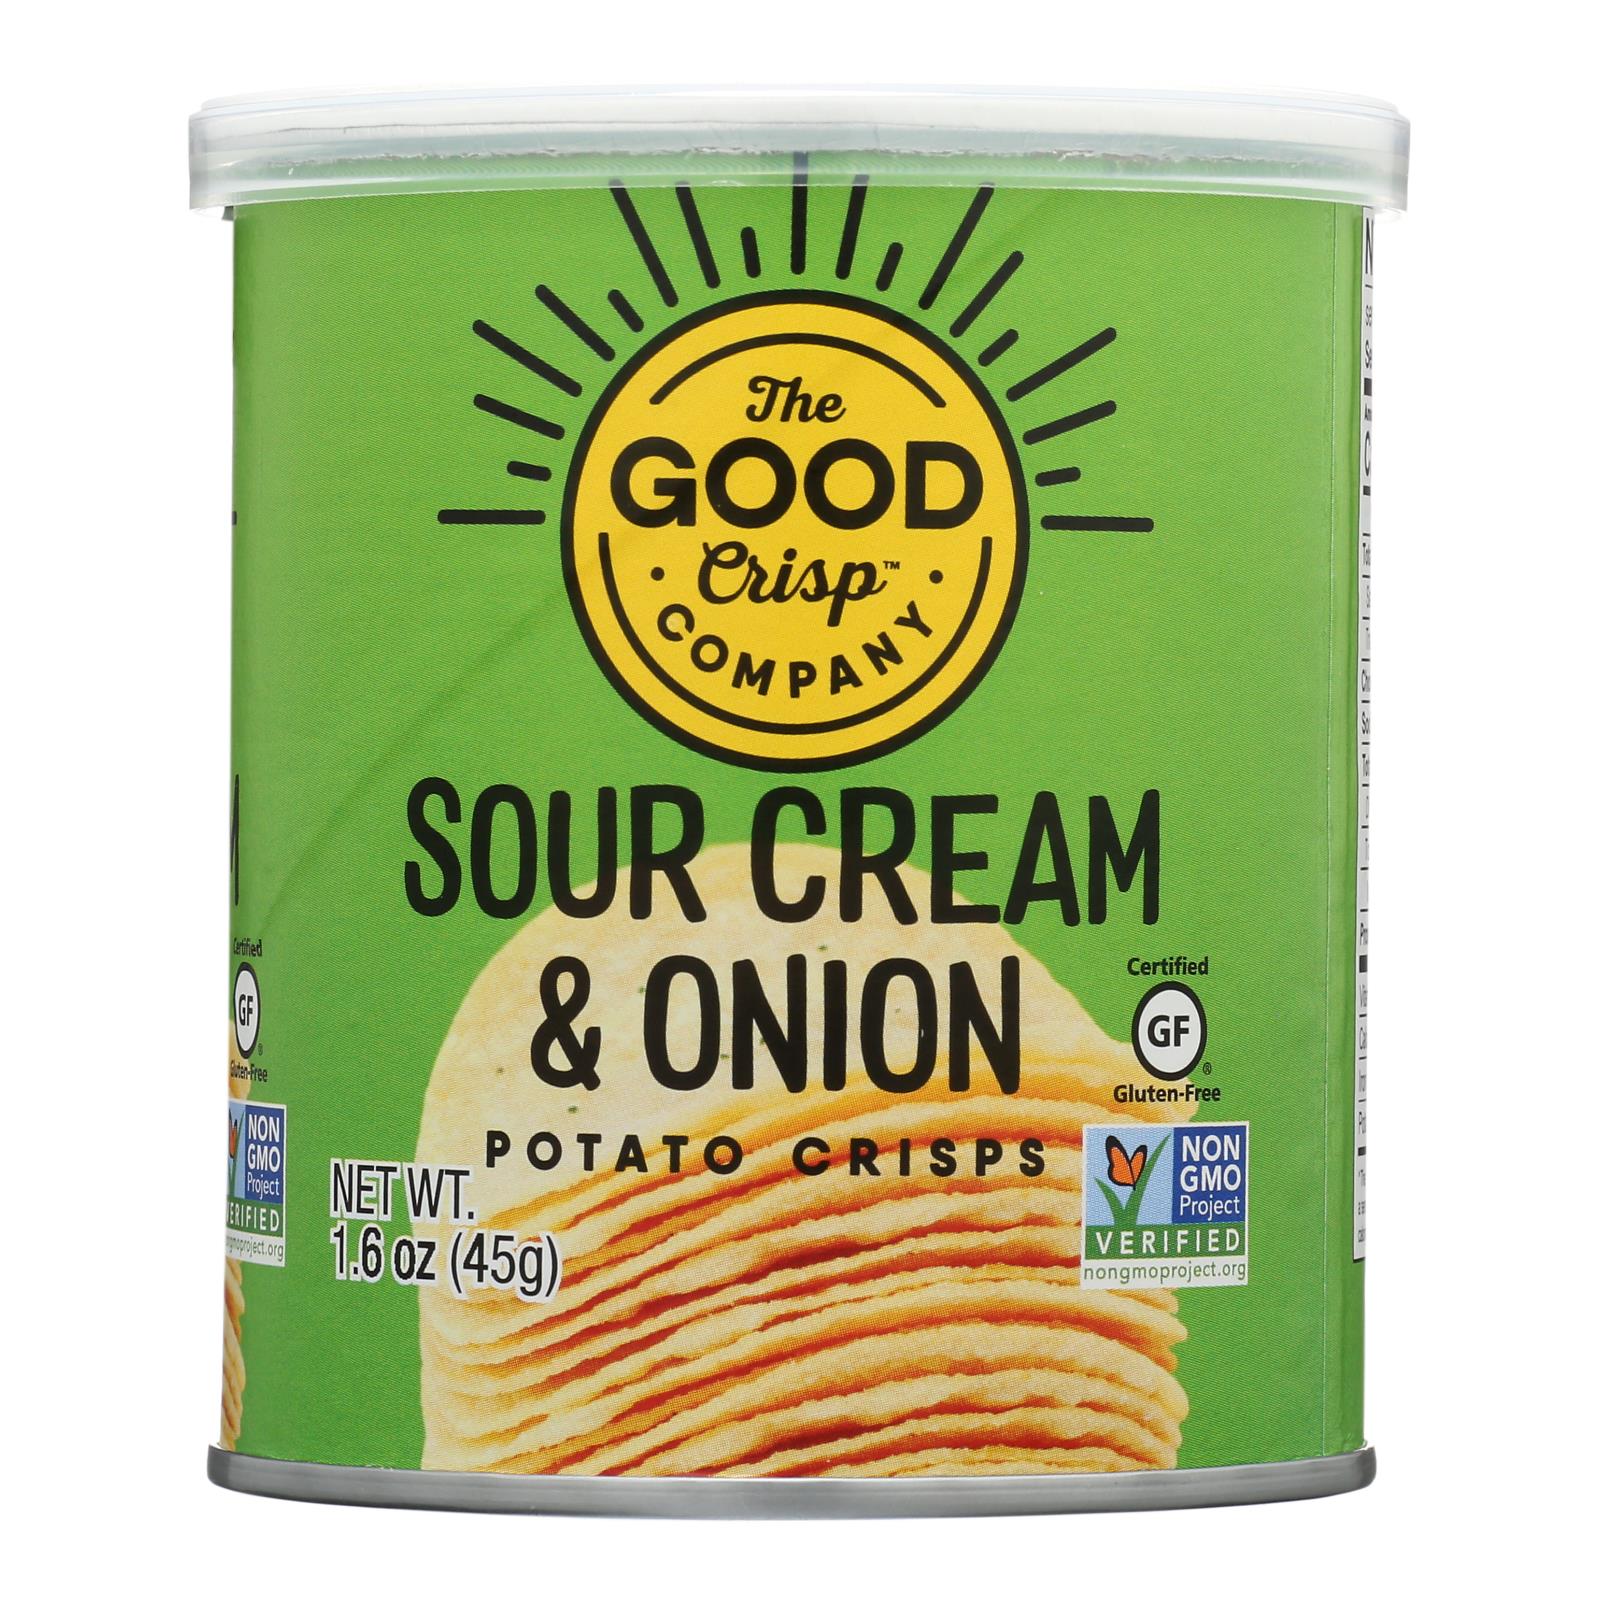 The Good Crisp Company Potato Crisps - Sour Cream And Onion - Case Of 12 - 1.6 Oz